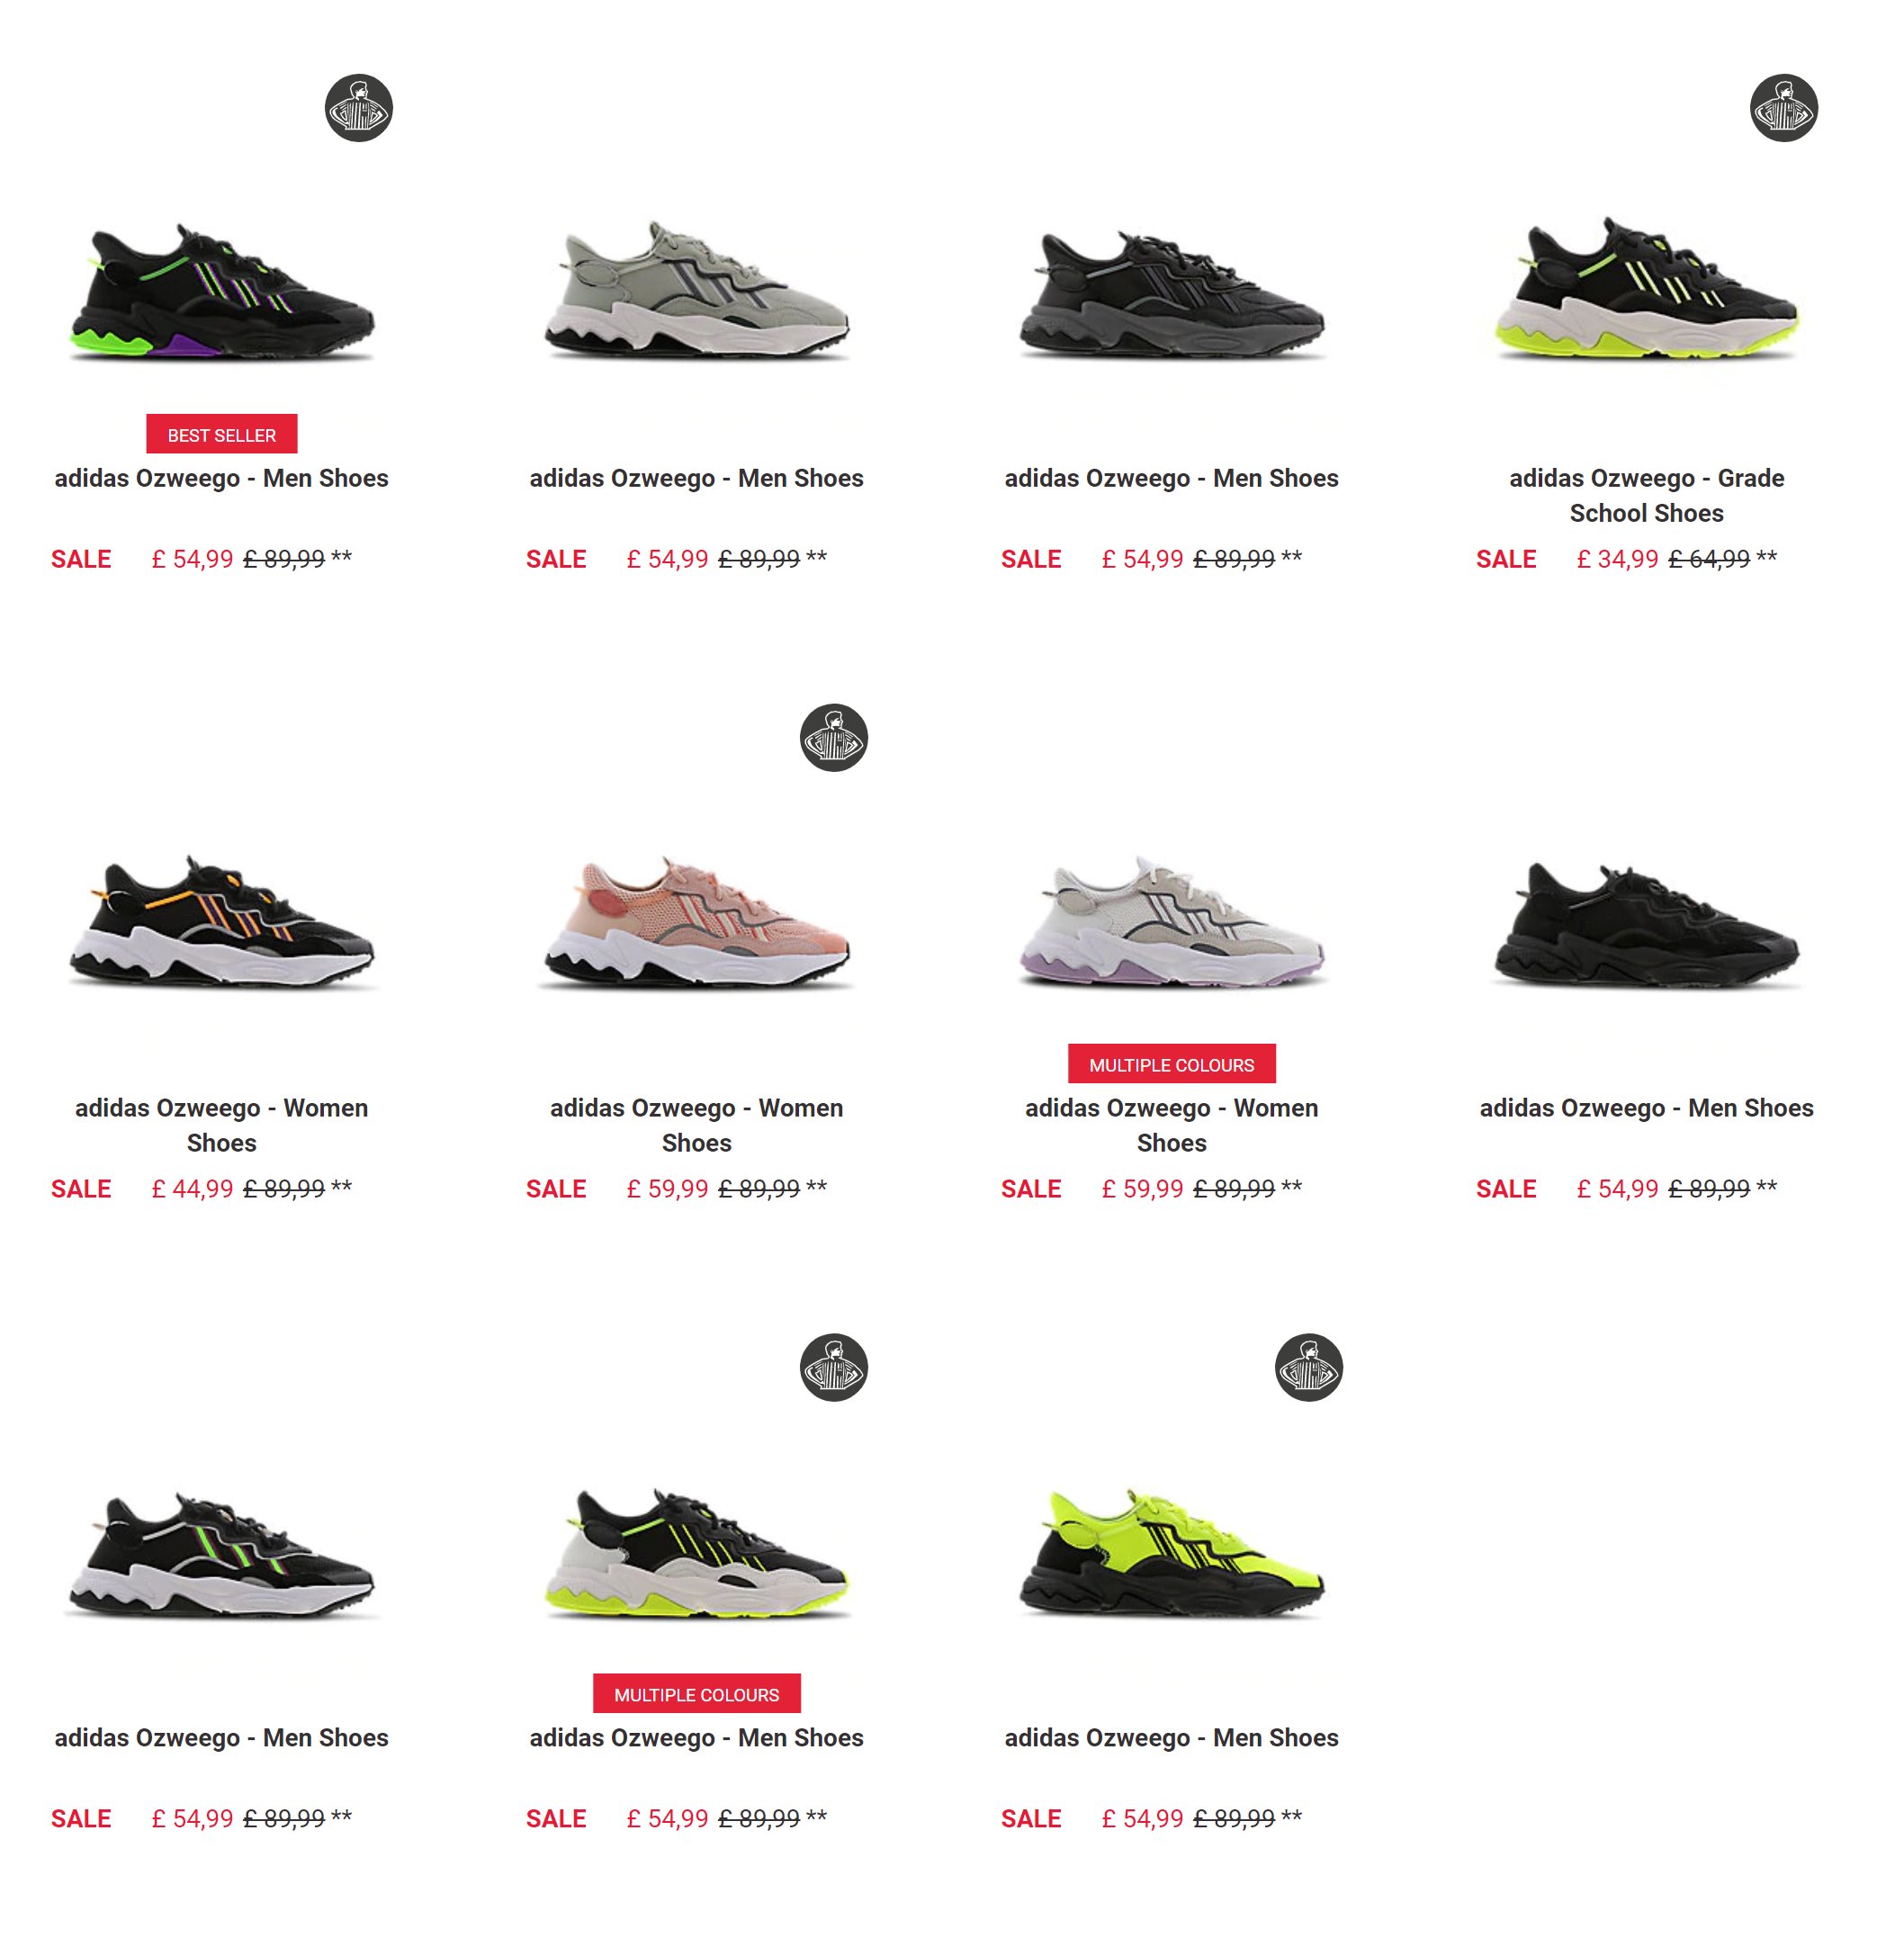 MoreSneakers.com on Twitter: "EU ONLY: adidas Originals Ozweego available sale via Footlocker EU FR:https://t.co/0nF05i82vH UK:https://t.co/96yFwZGWRt DE:https://t.co/pfUAccEpQP NL:https://t.co/A5TyZ0TVS8 https://t.co/1NaCODG0K2" / Twitter